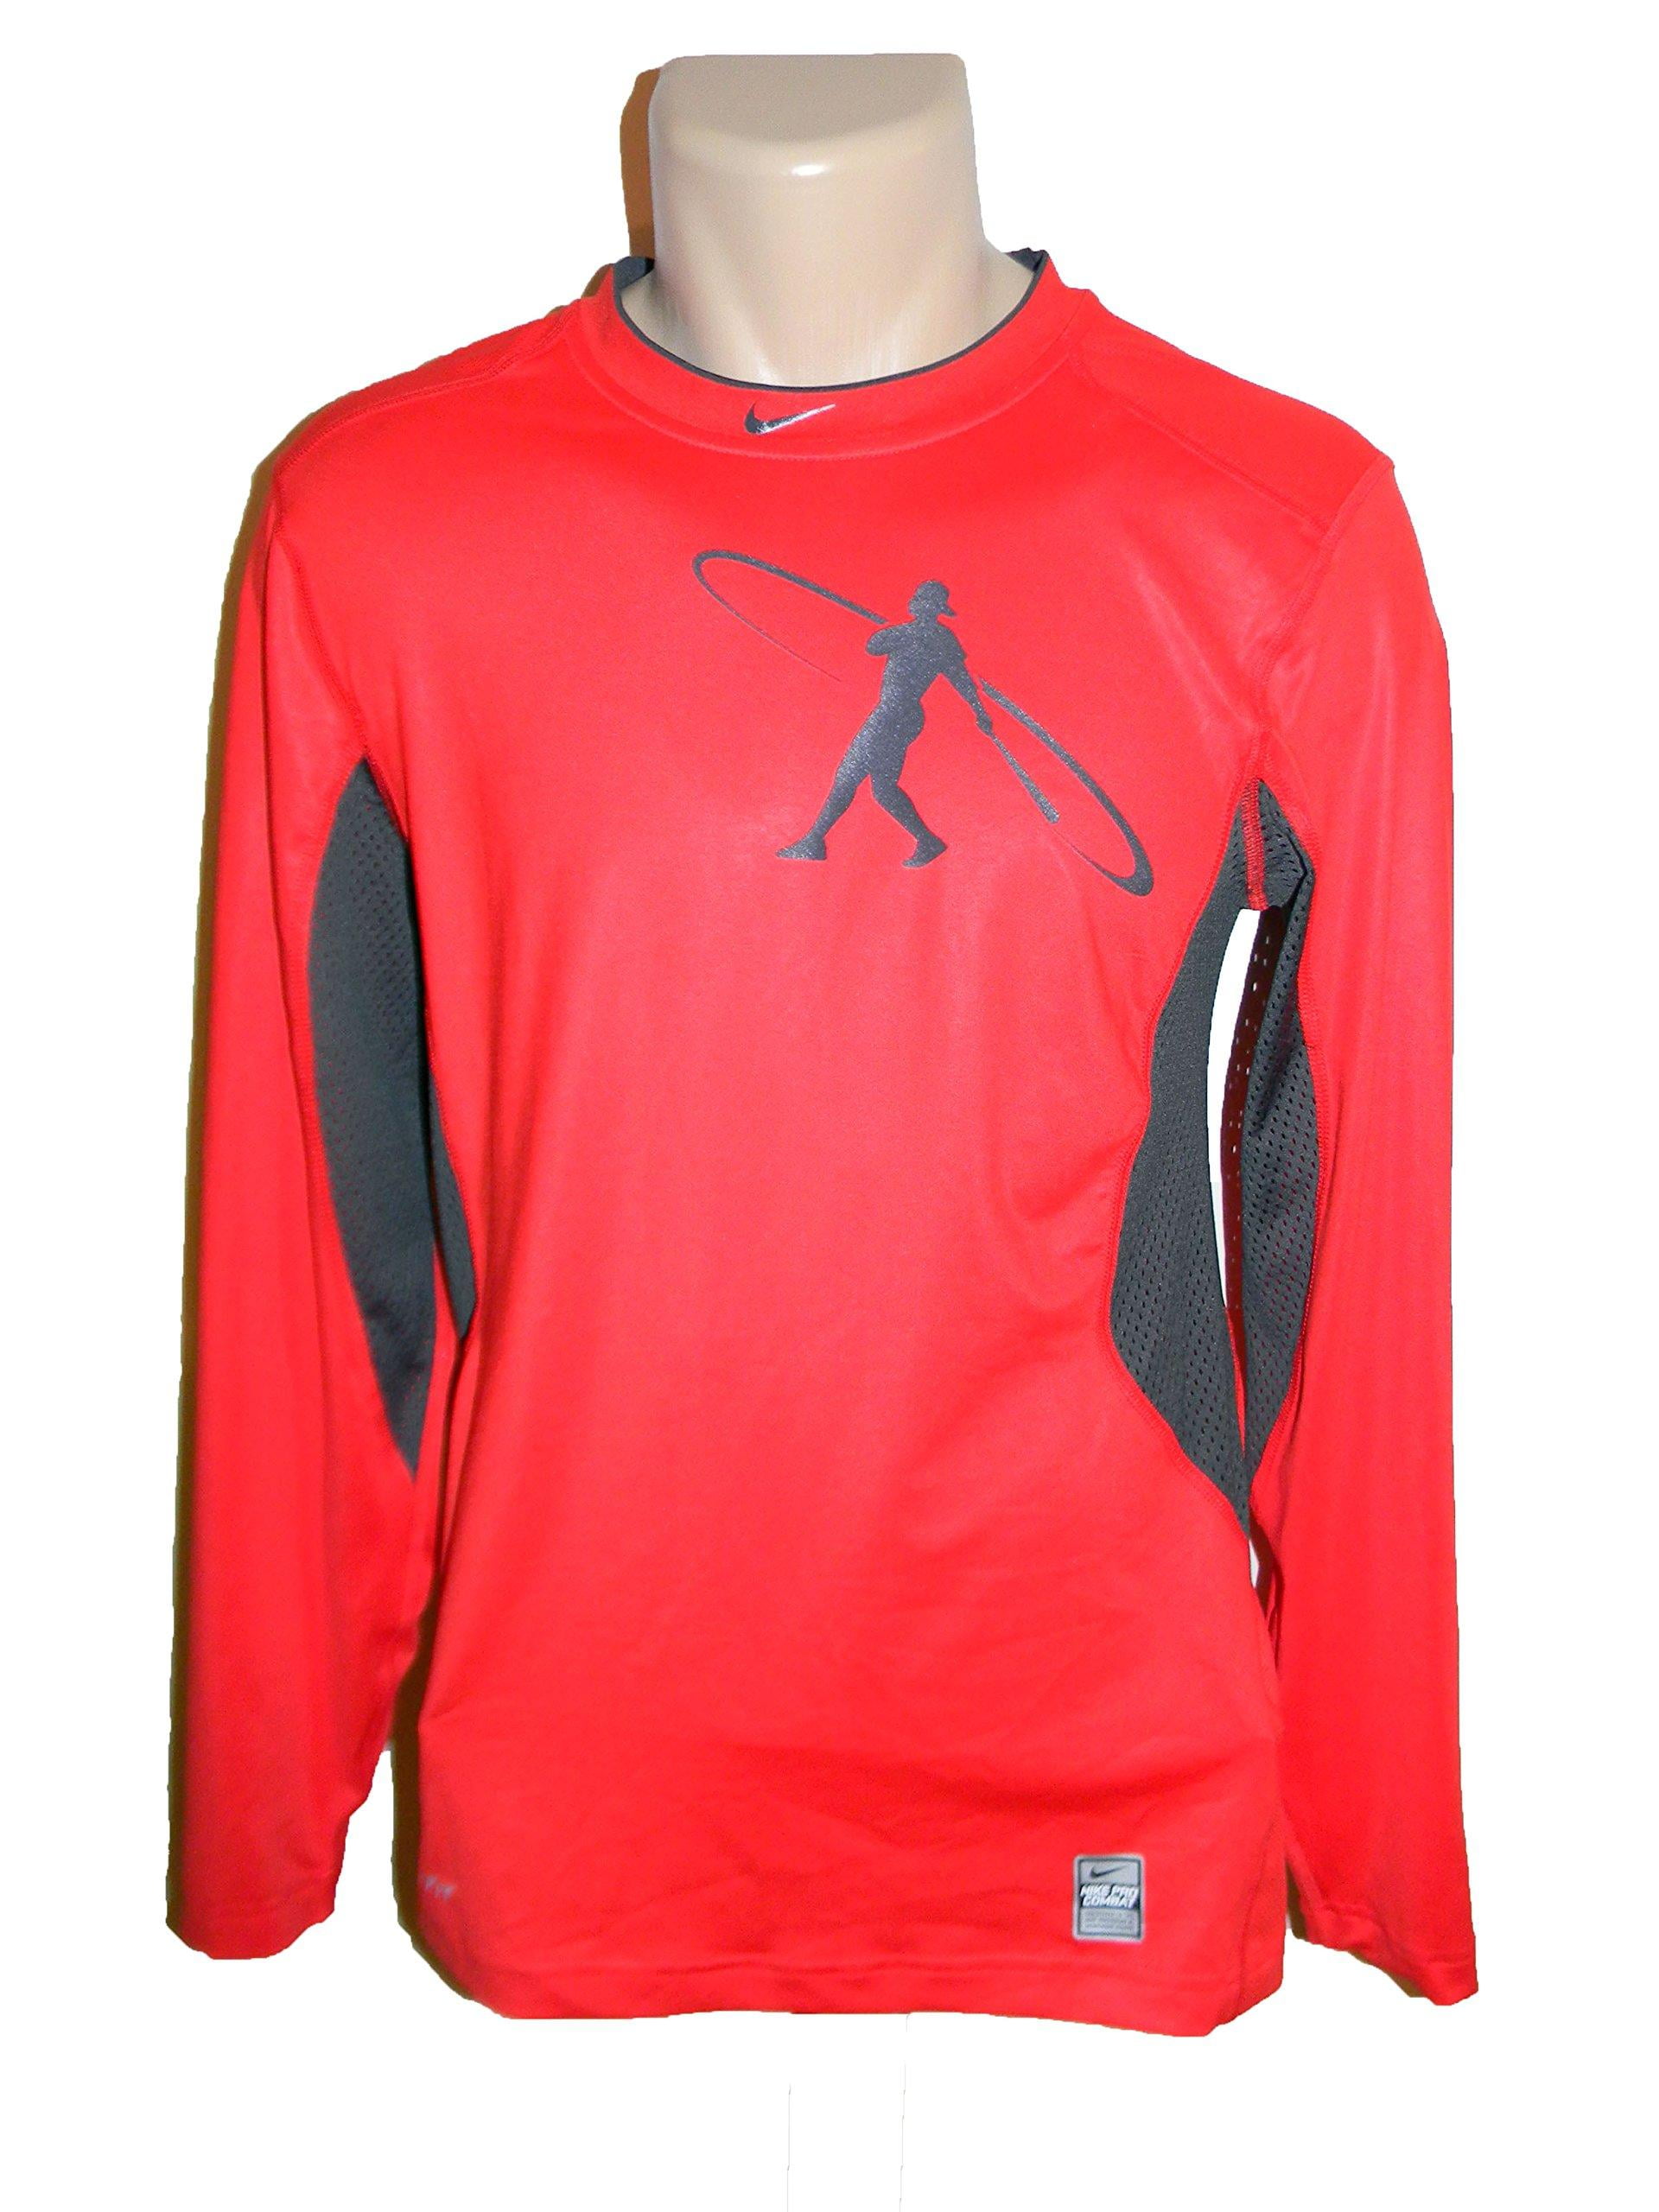 Nike Elite Baseball Shirt Red - Walmart.com